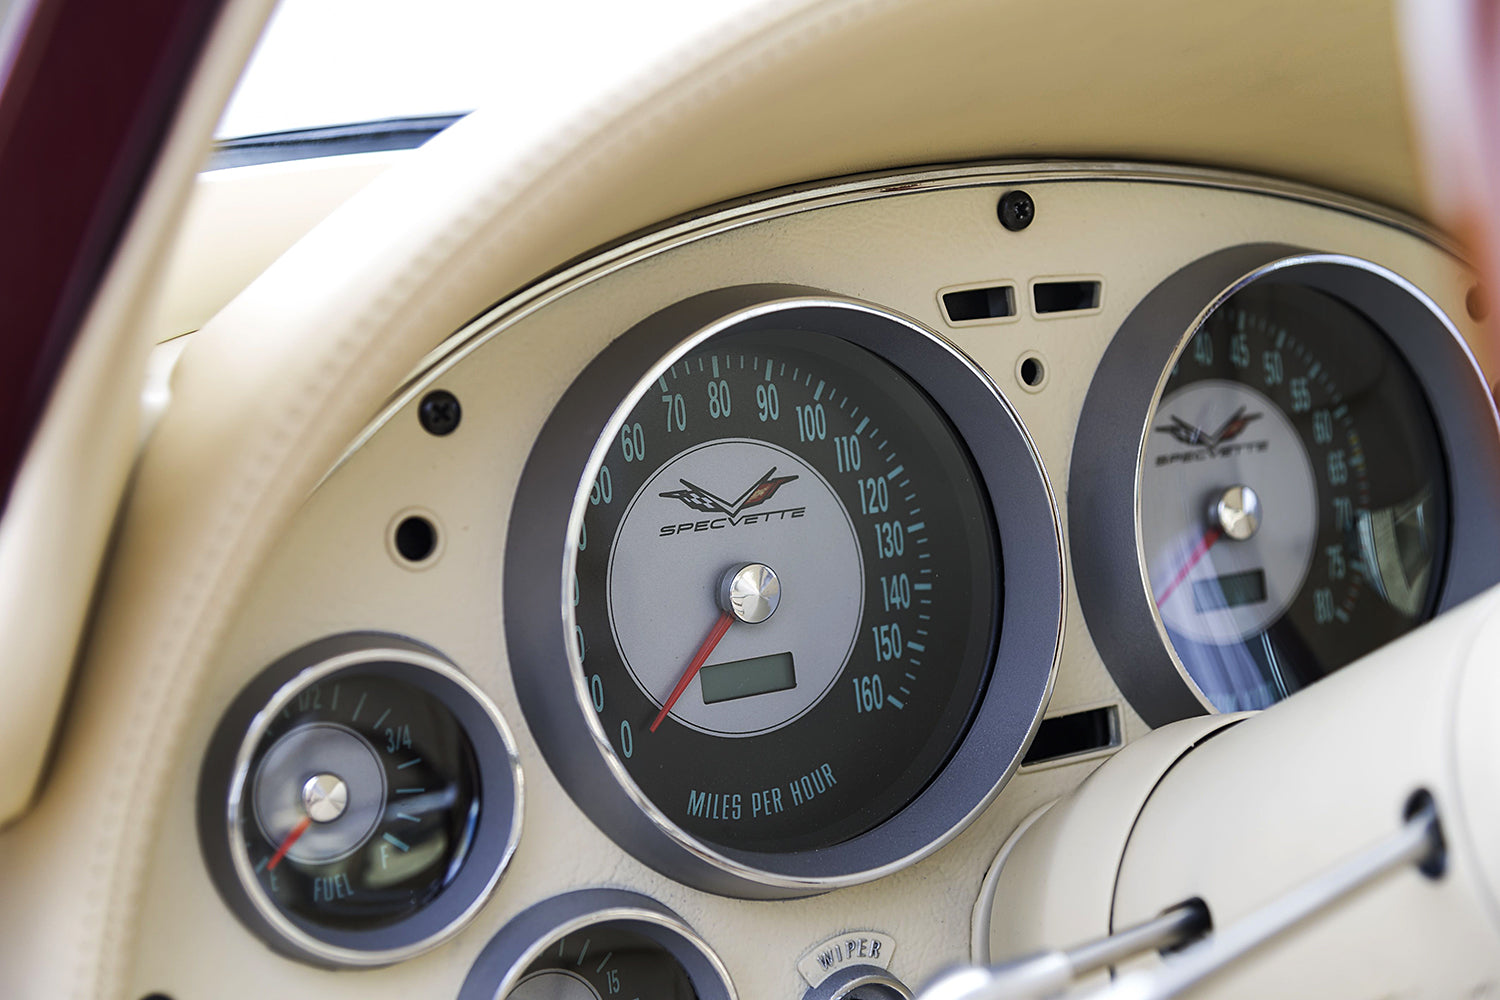 1963 Split Window Corvette with Relicate Napali Custom leather interior dash gauges